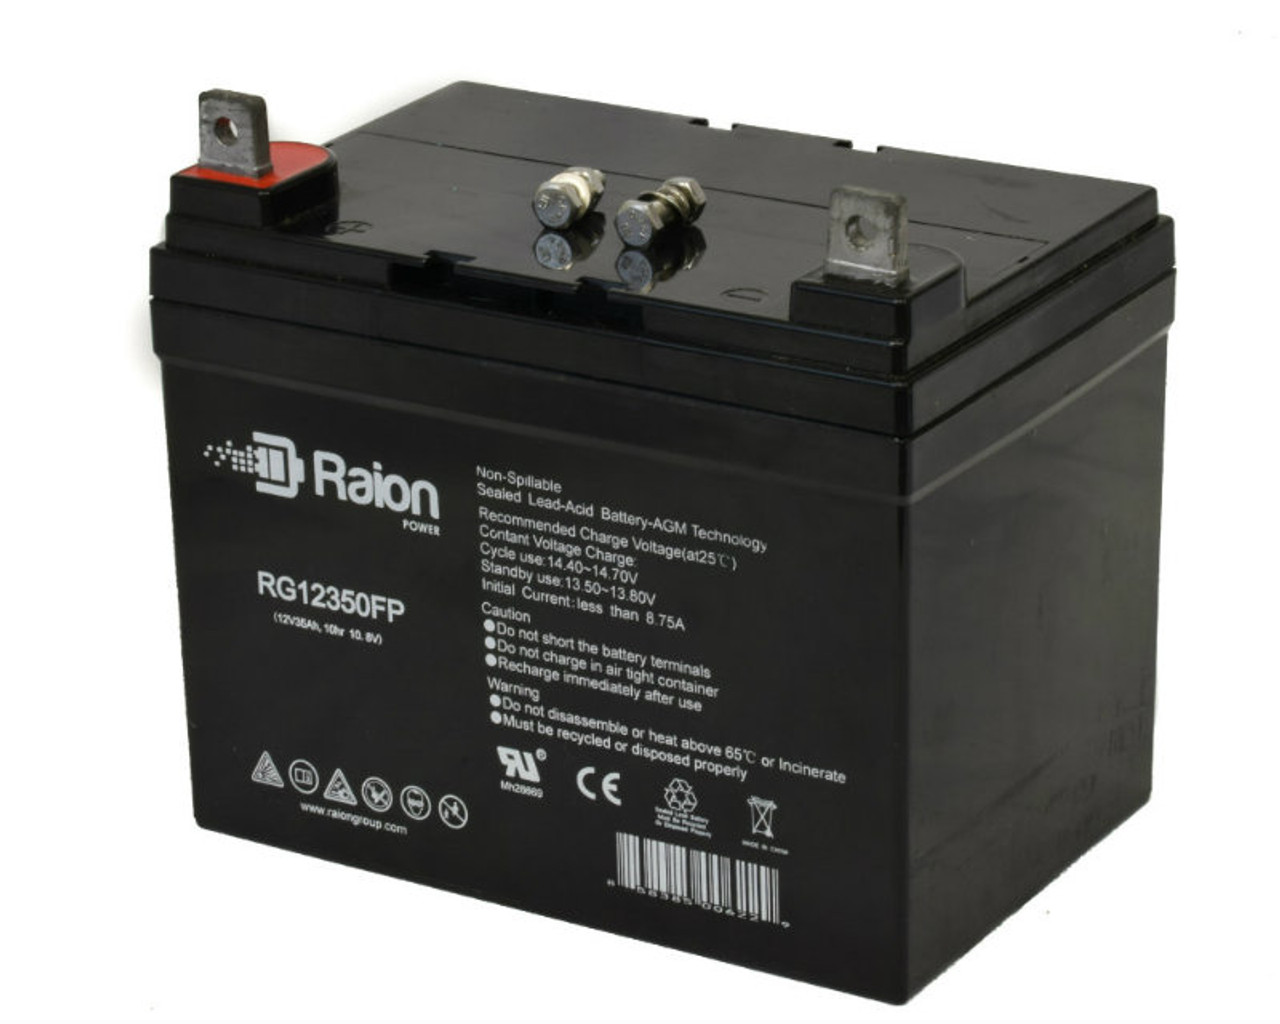 Raion Power Replacement 12V 35Ah RG12350FP Battery for Honda H4120